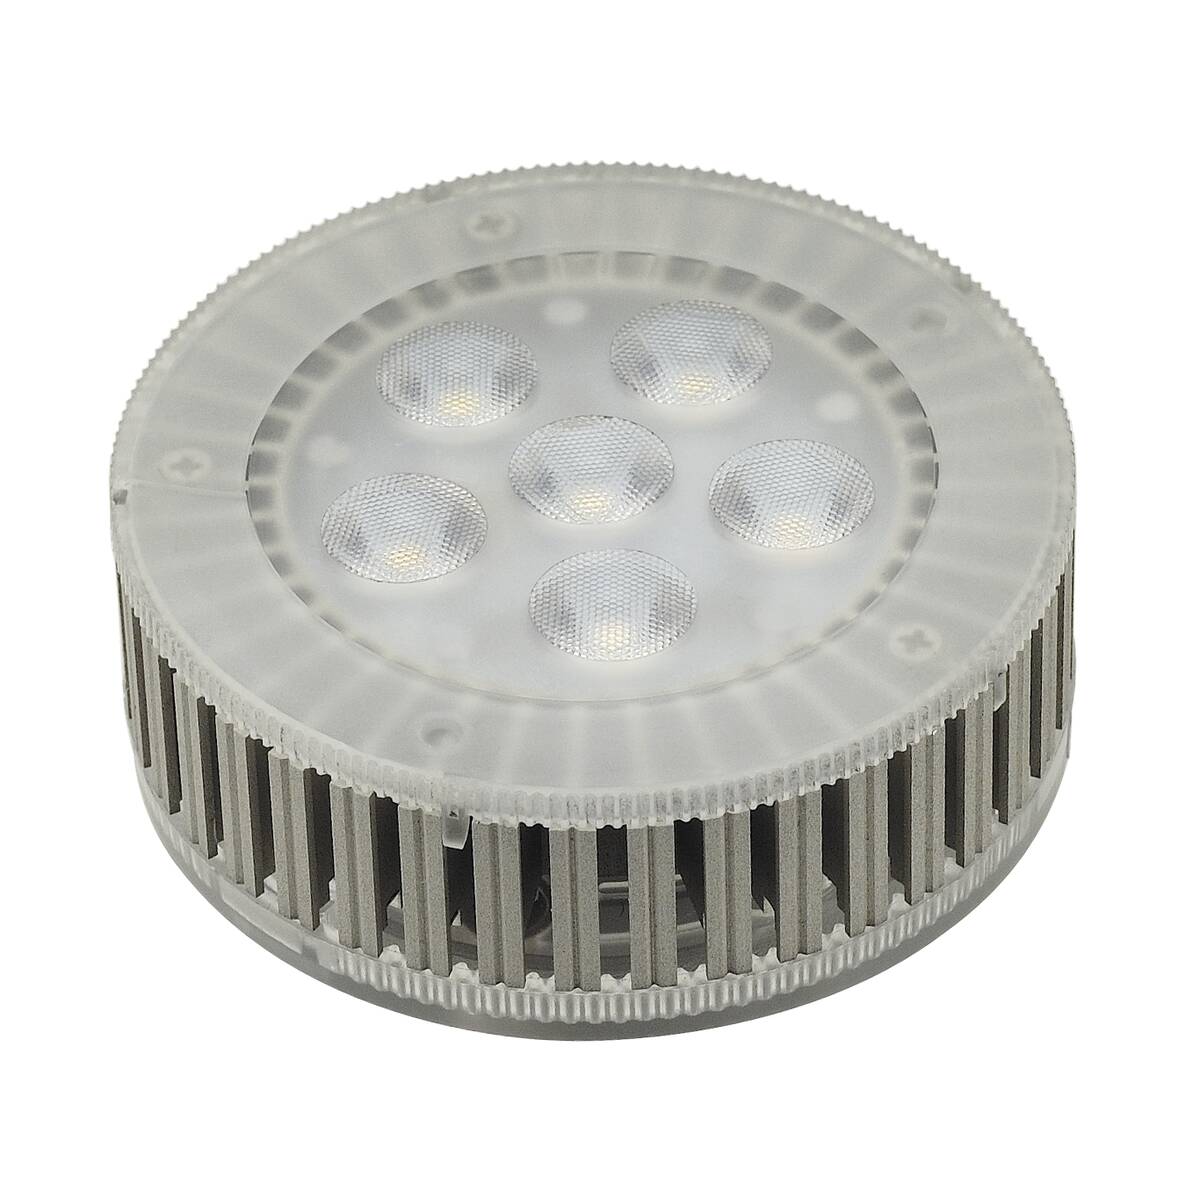 LED Leuchtmittel TUNABLE SMART - SLV 1005313 - KS Licht